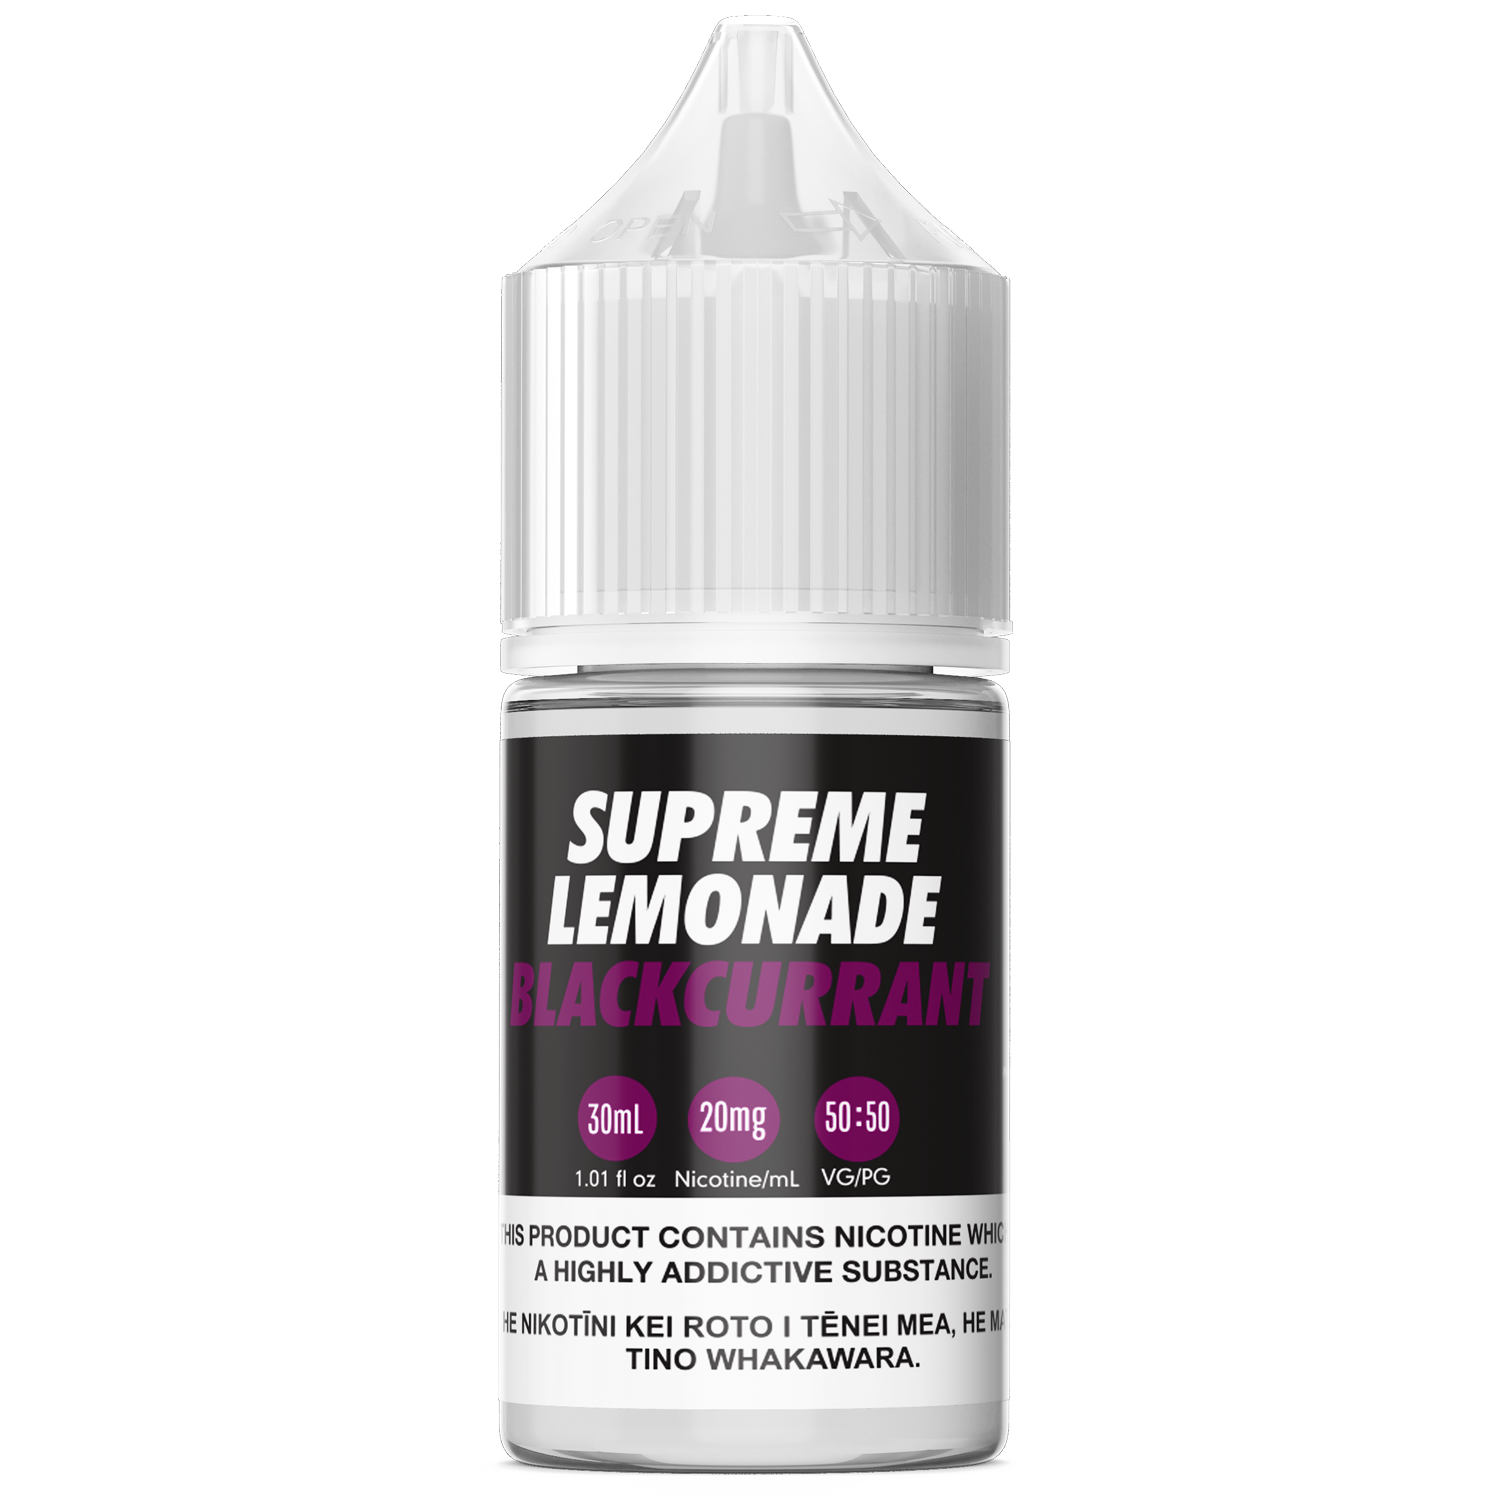 Supreme Blackcurrant Lemonade - Simply Vape